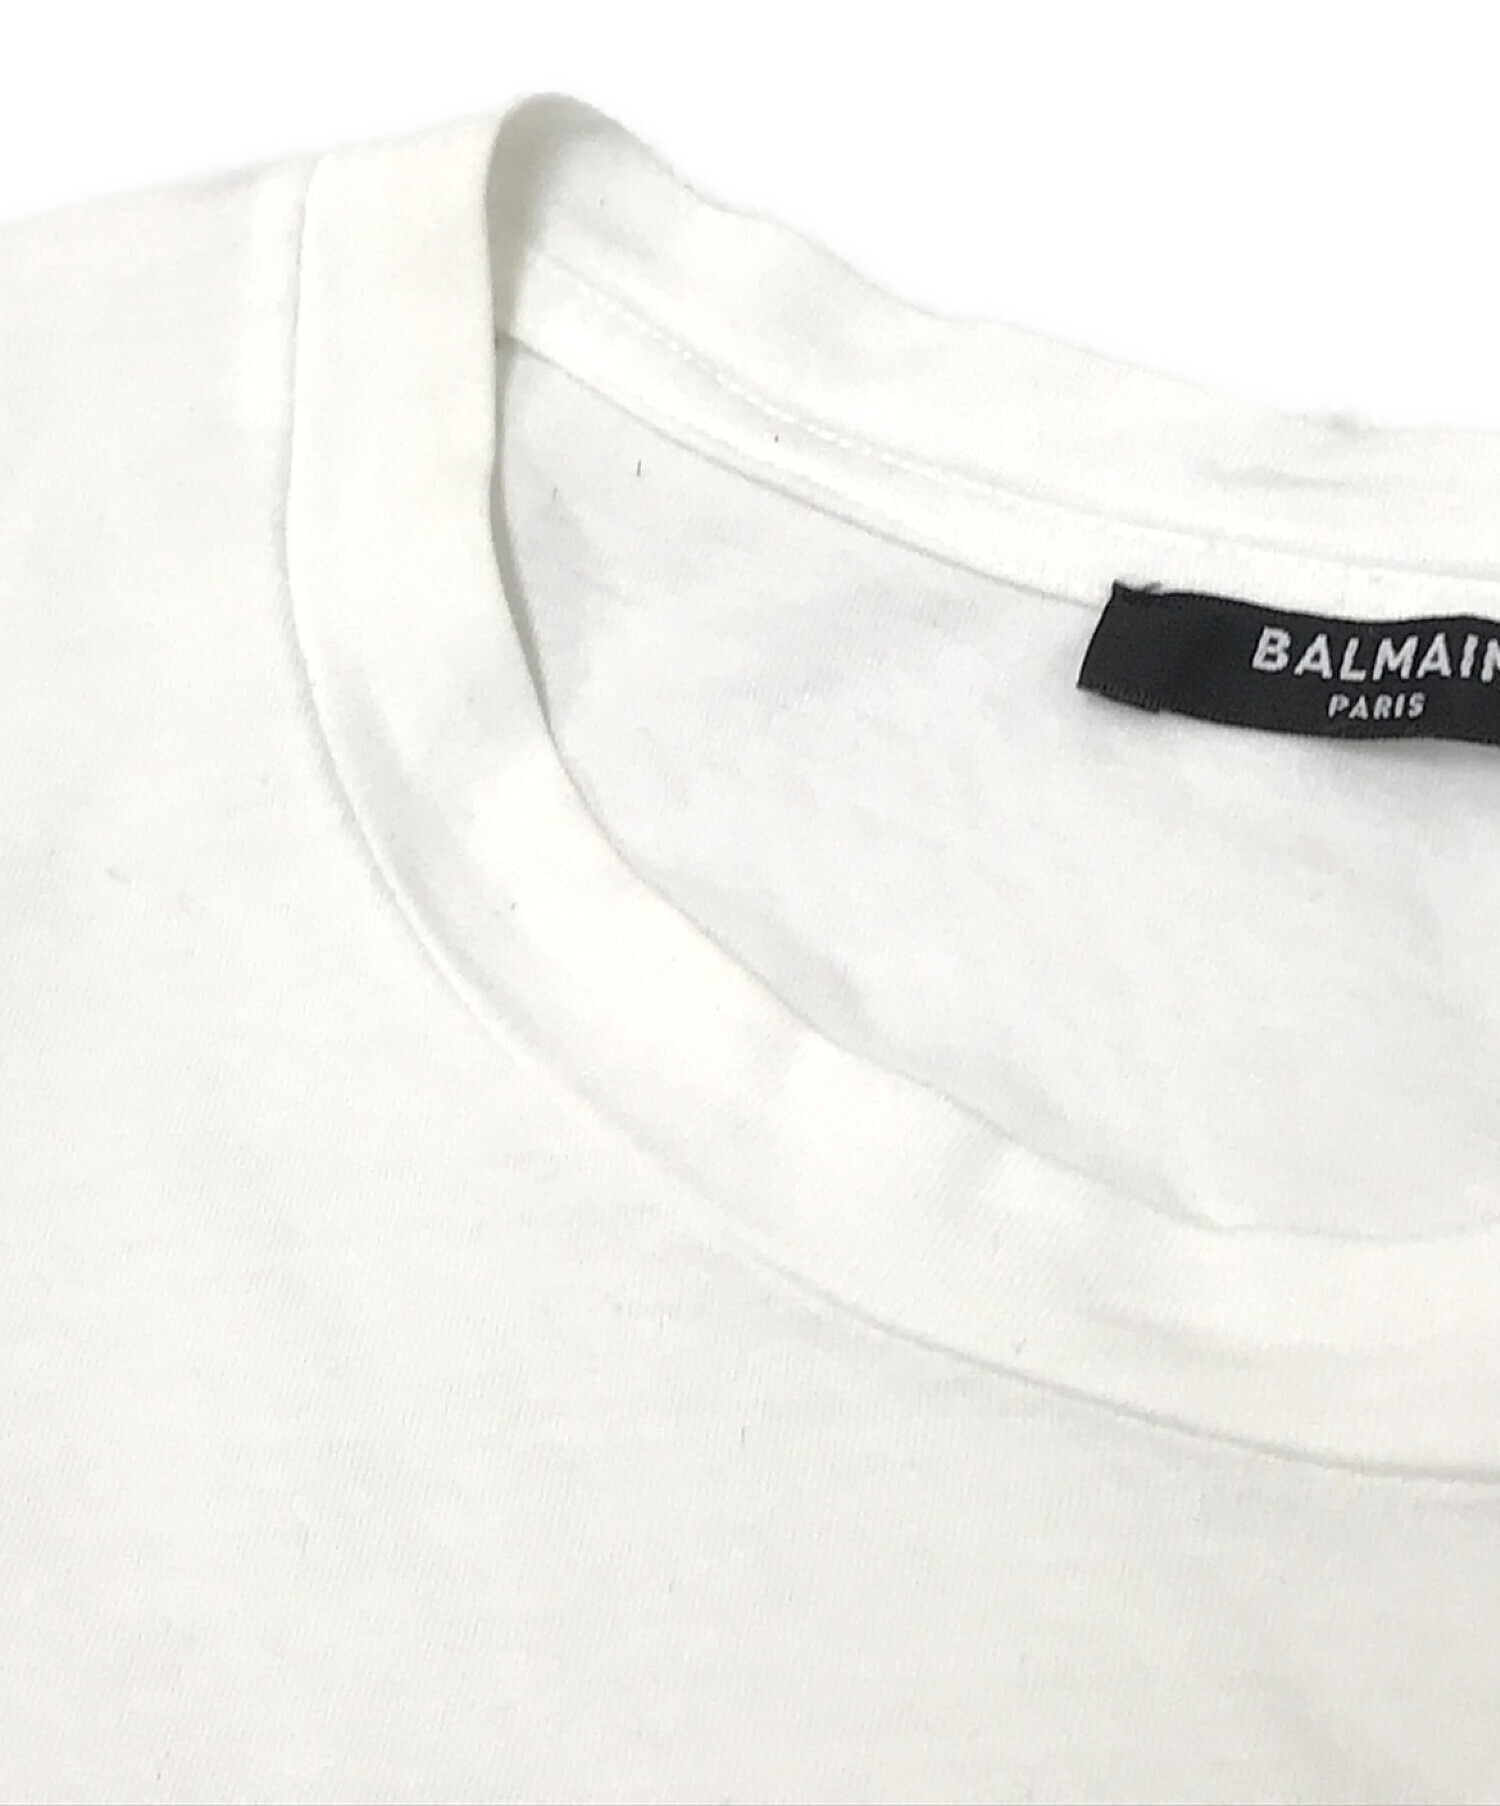 BALMAIN (バルマン) ロゴ Tシャツ ホワイト サイズ:S